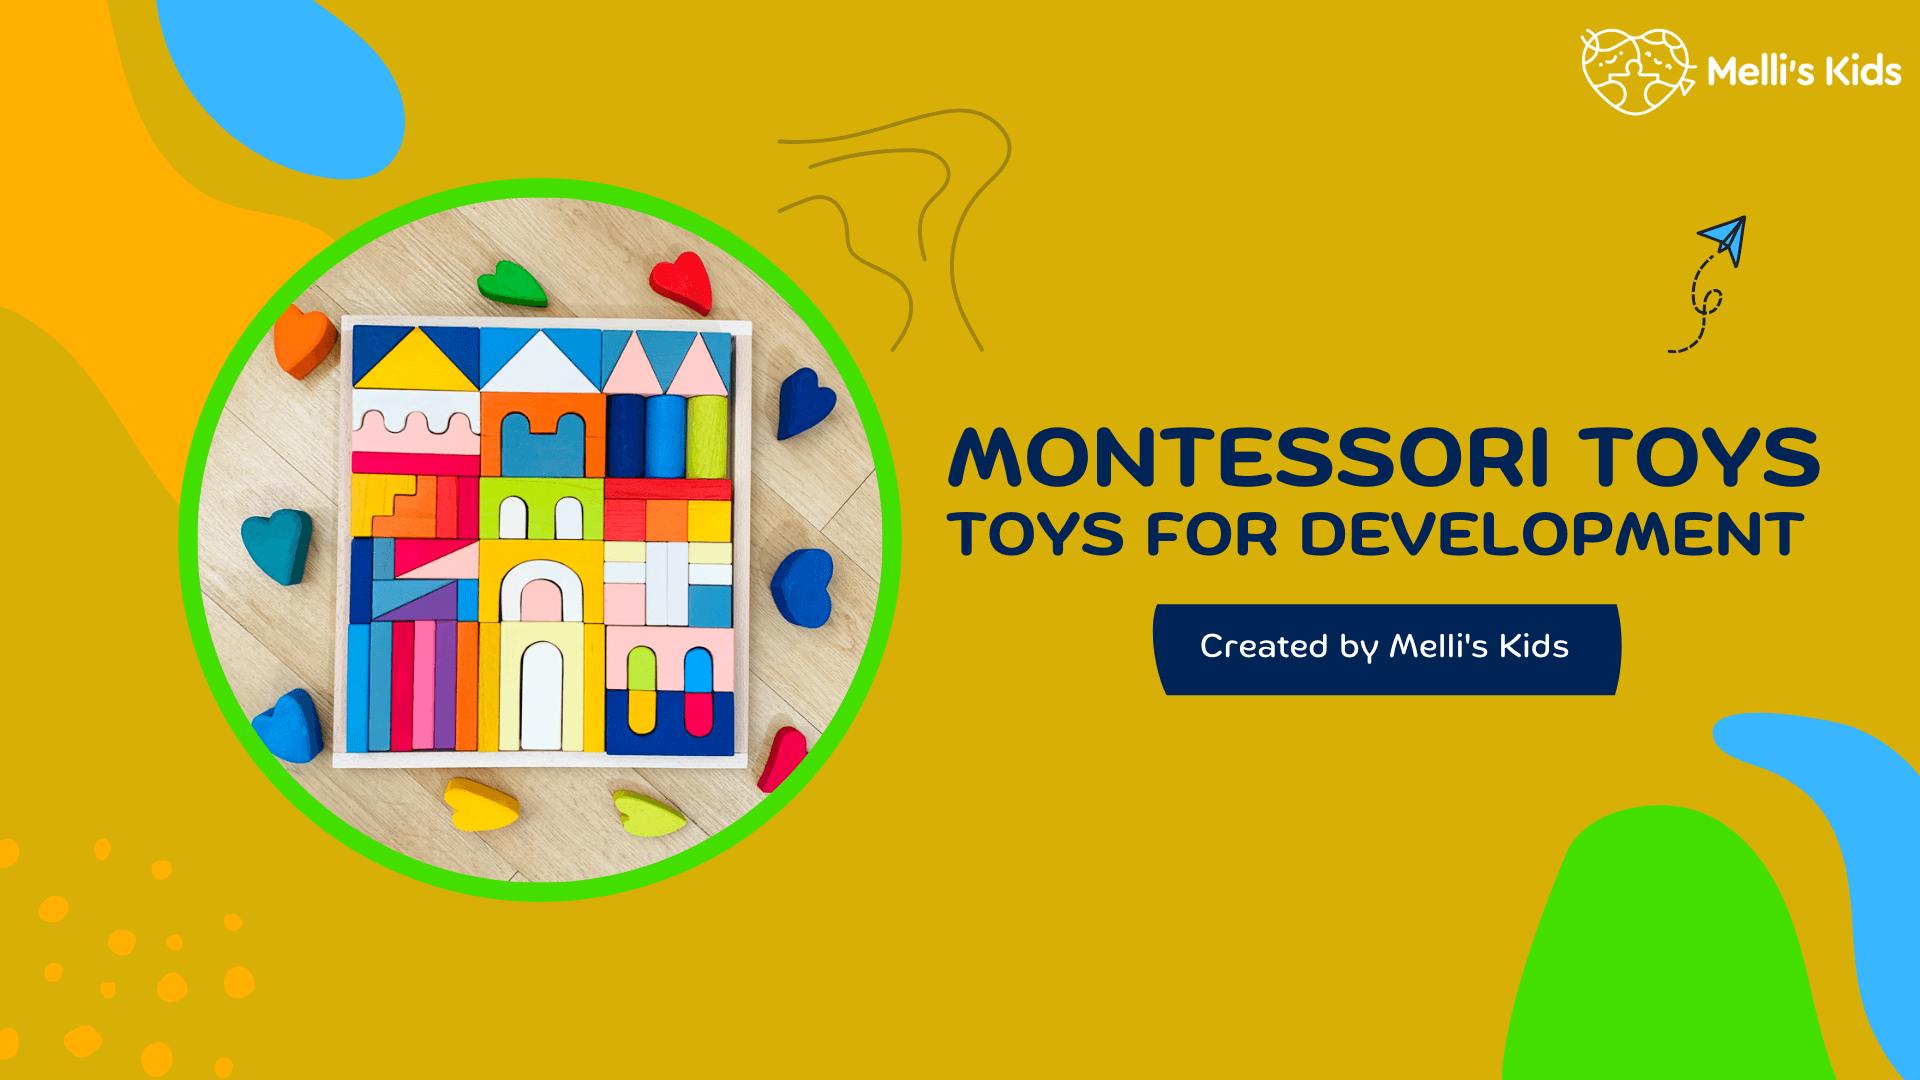 Montessori toys - Toys for development - Melli's Kids